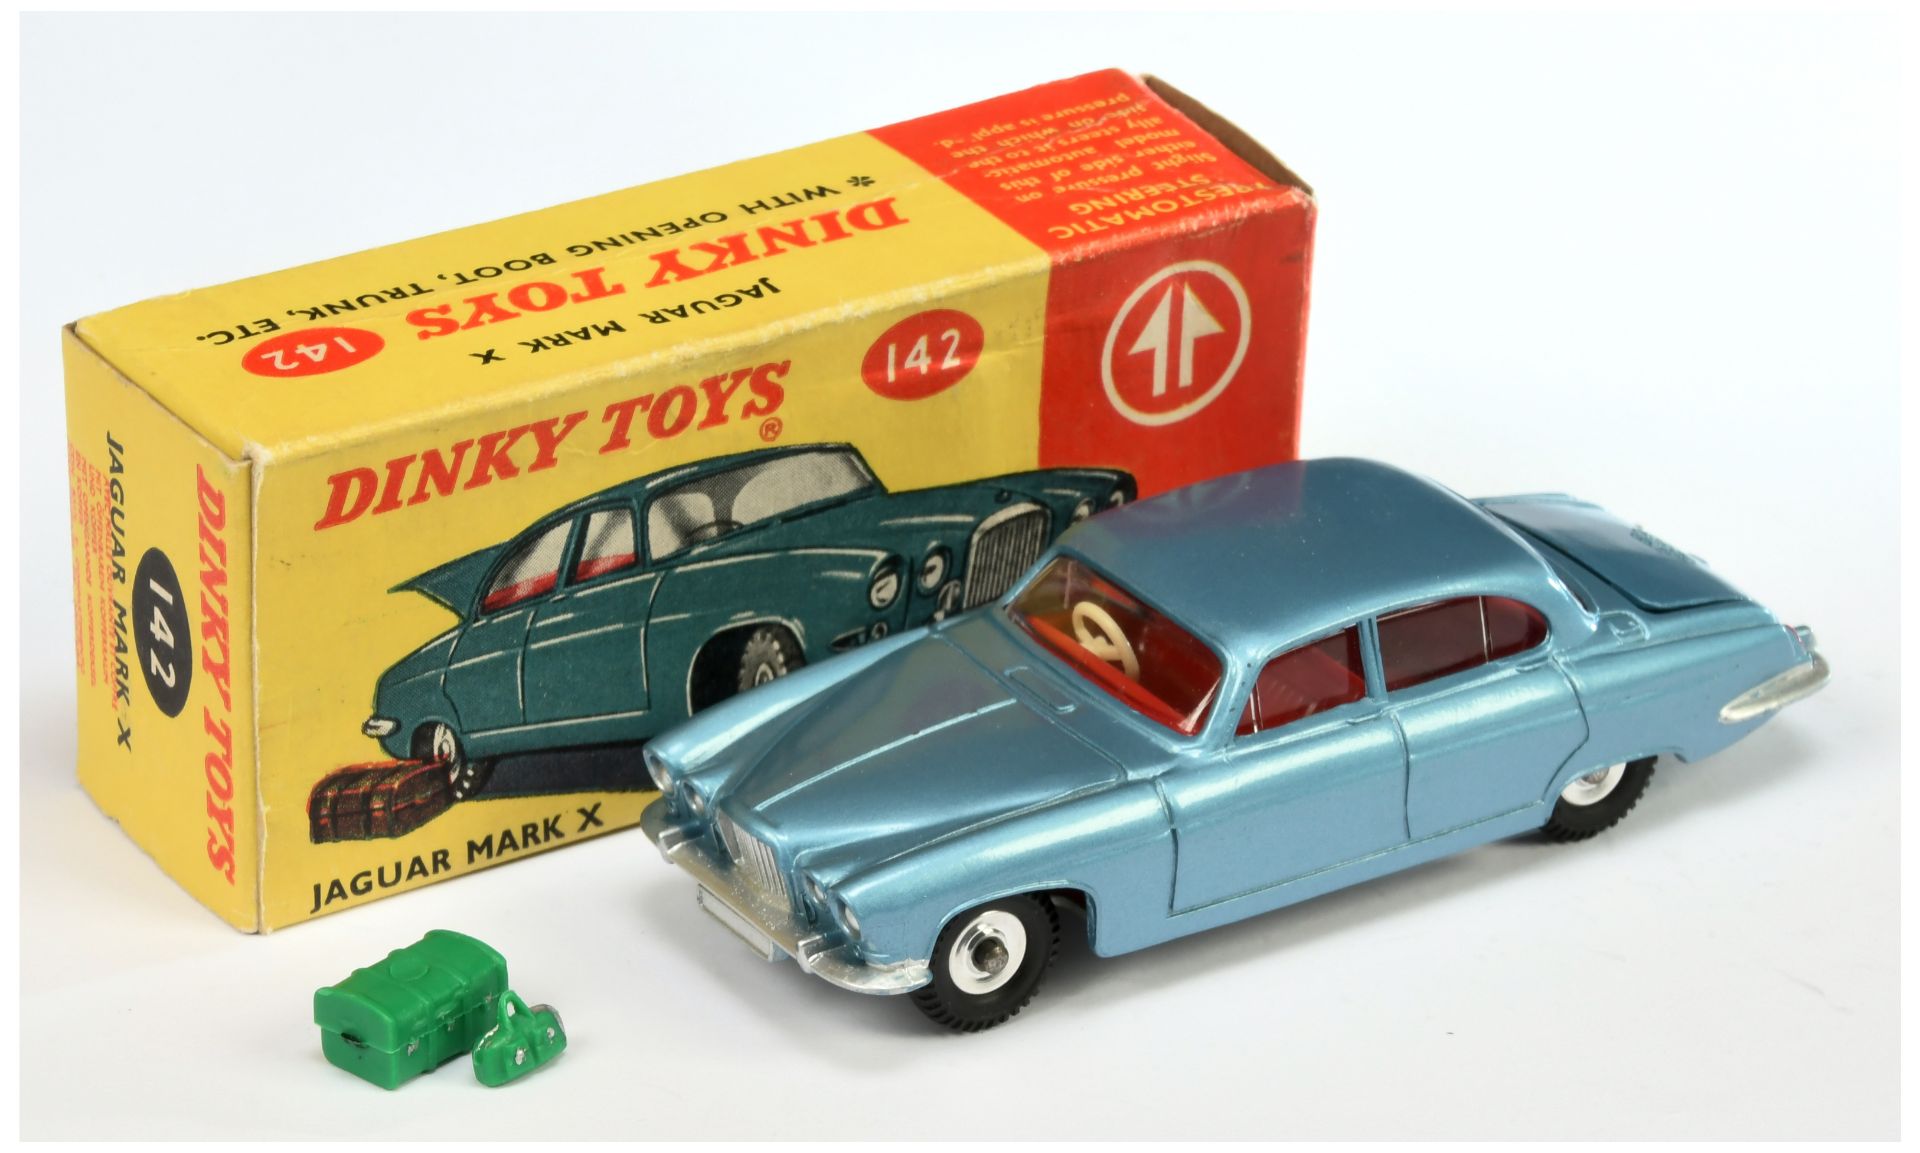 Dinky Toys 142 Jaguar Mark X Saloon - Steel Blue body, red interior, silver trim, spun hubs and c...